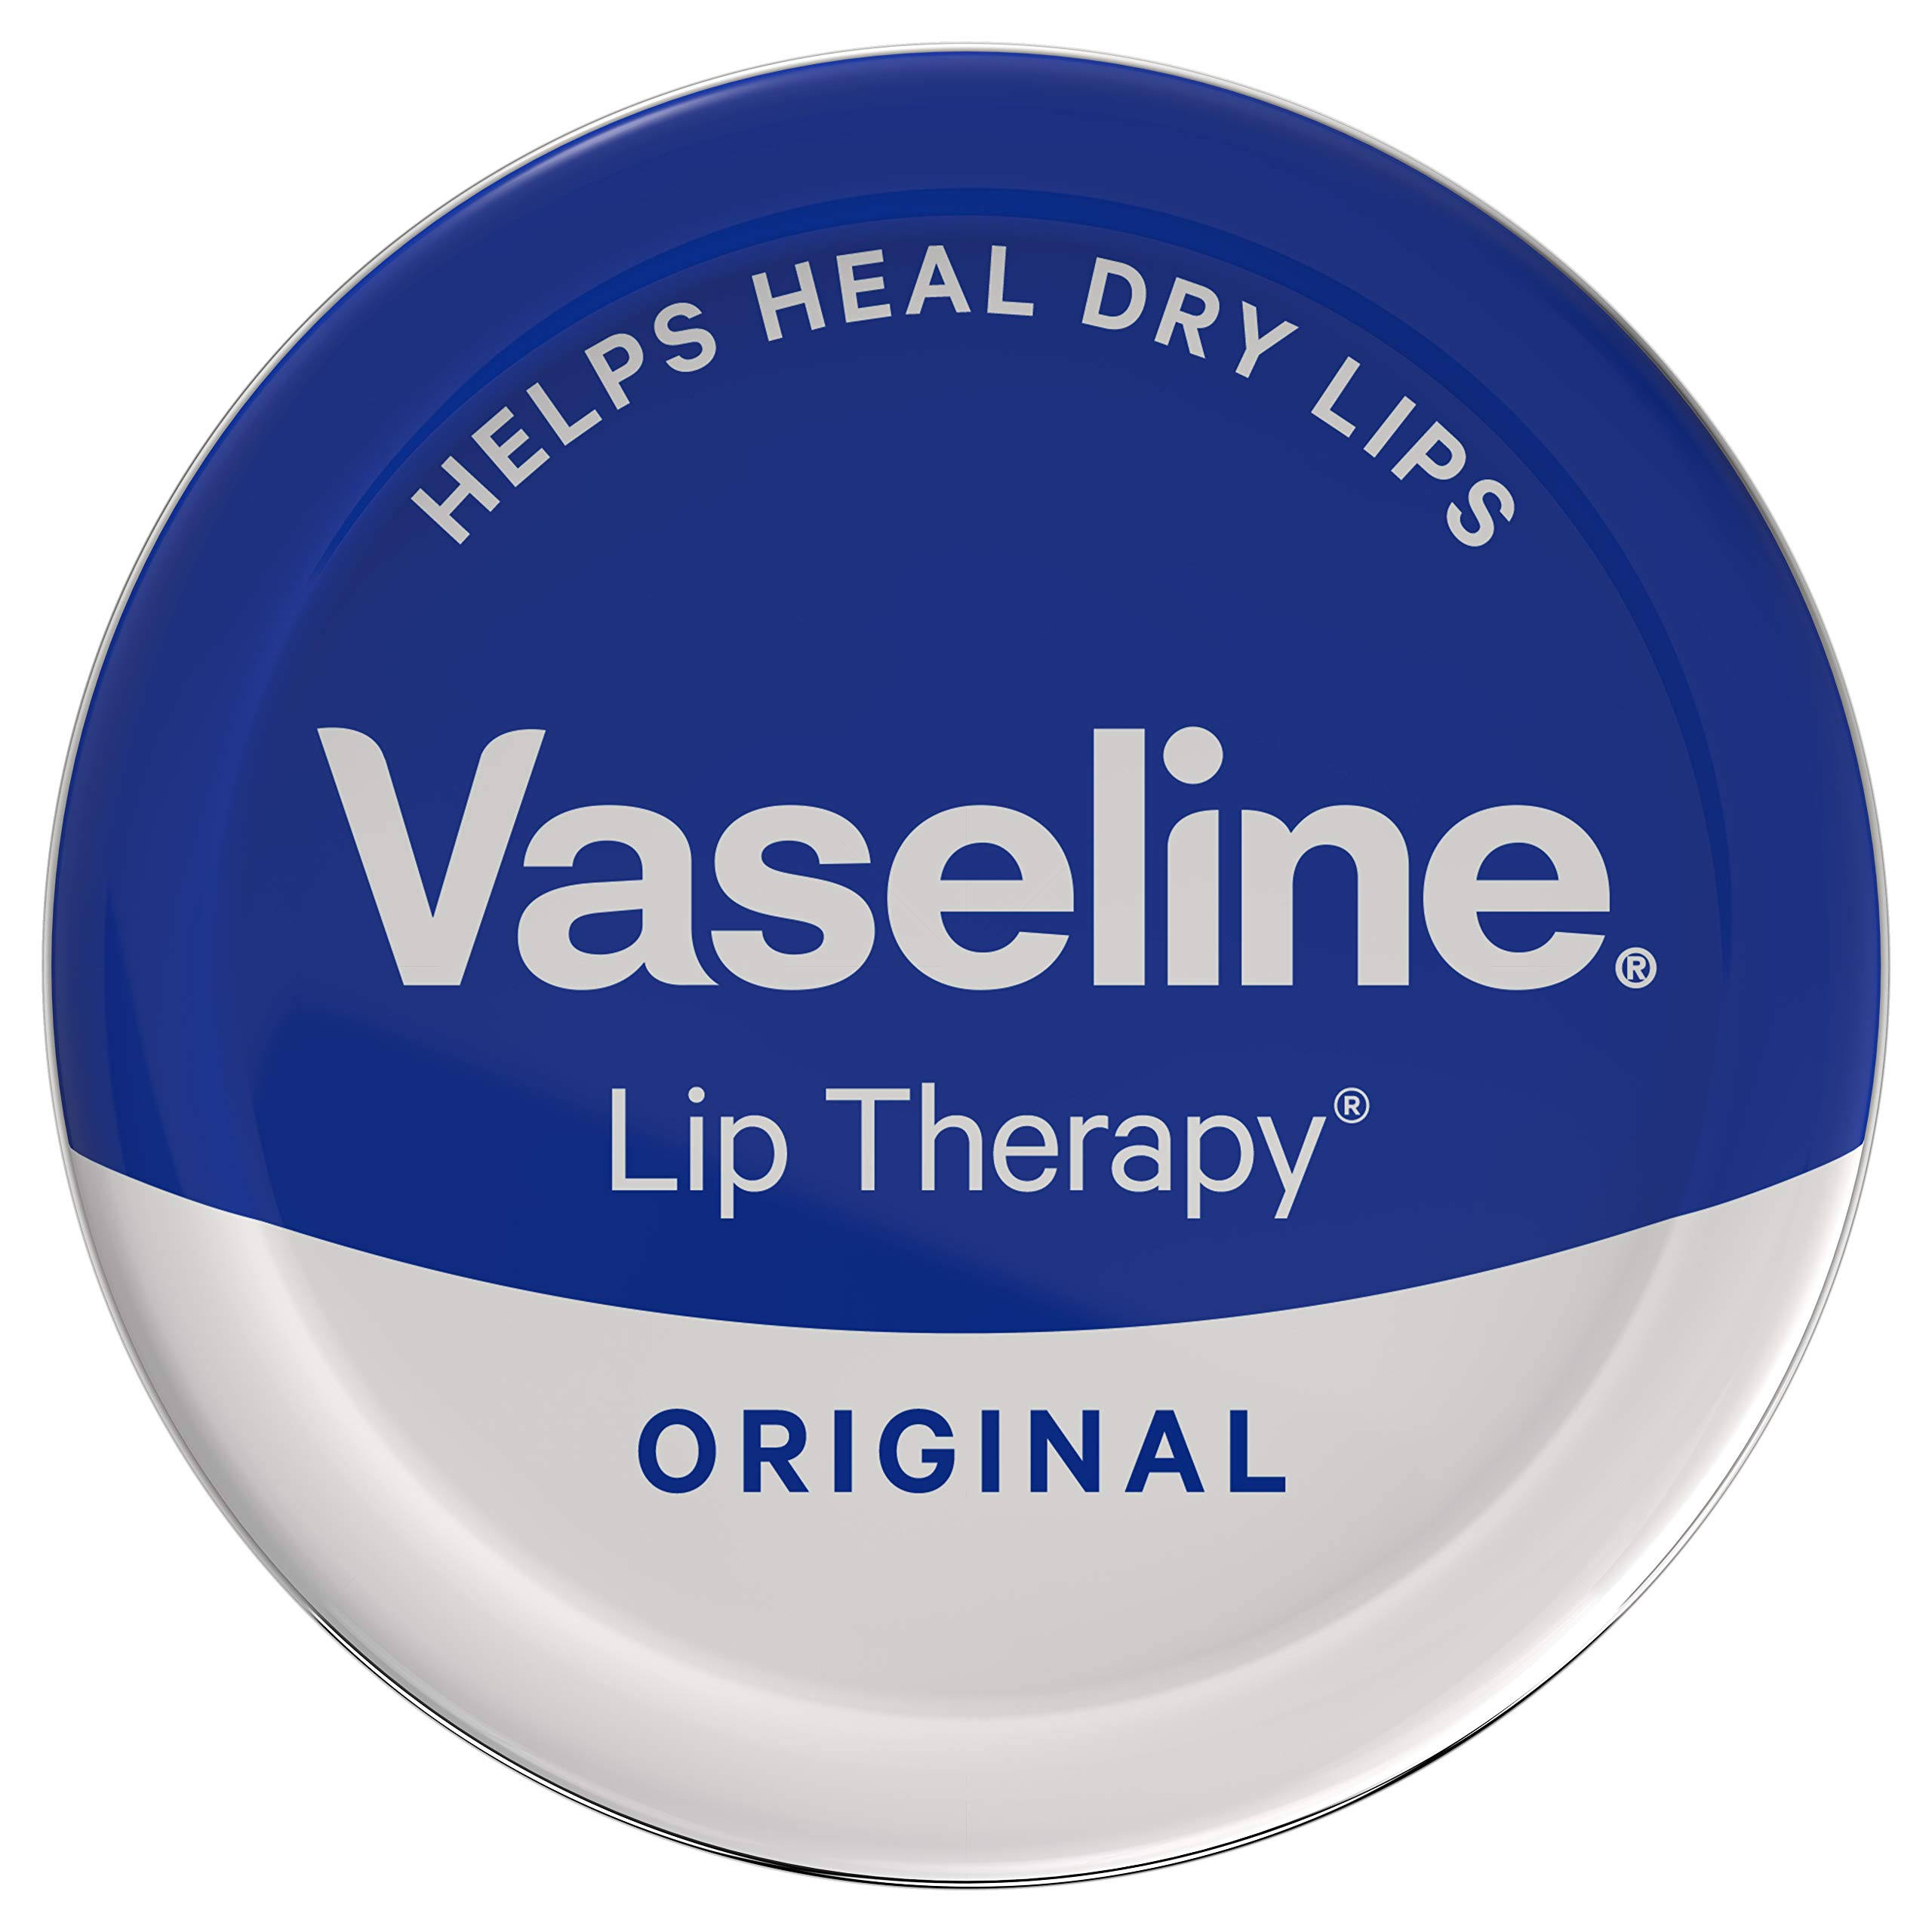 Vaseline Lip Therapy Petroleum Jelly - Original, 20g